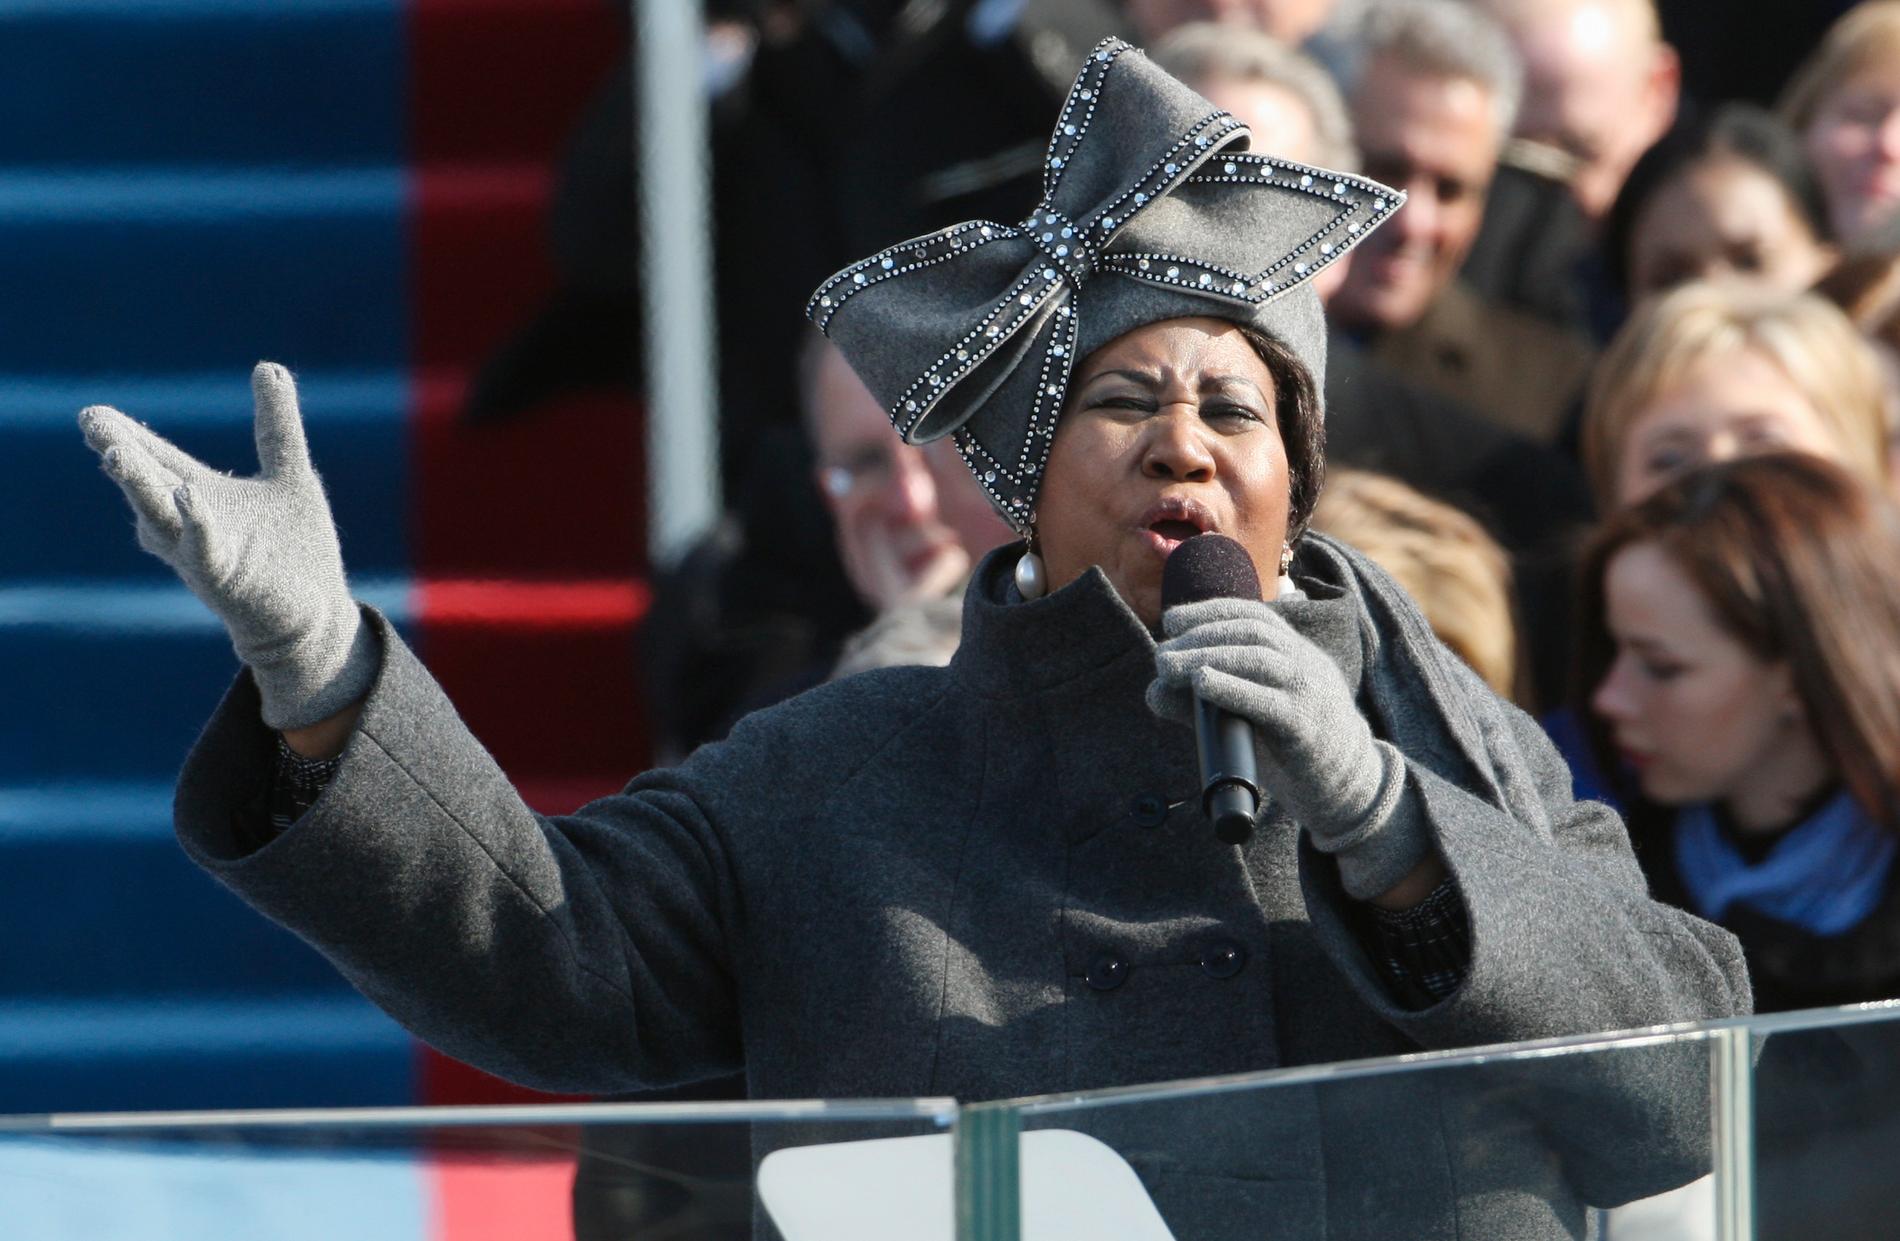 Franklin sjunger vid Barack Obamas installation i januari 2009.